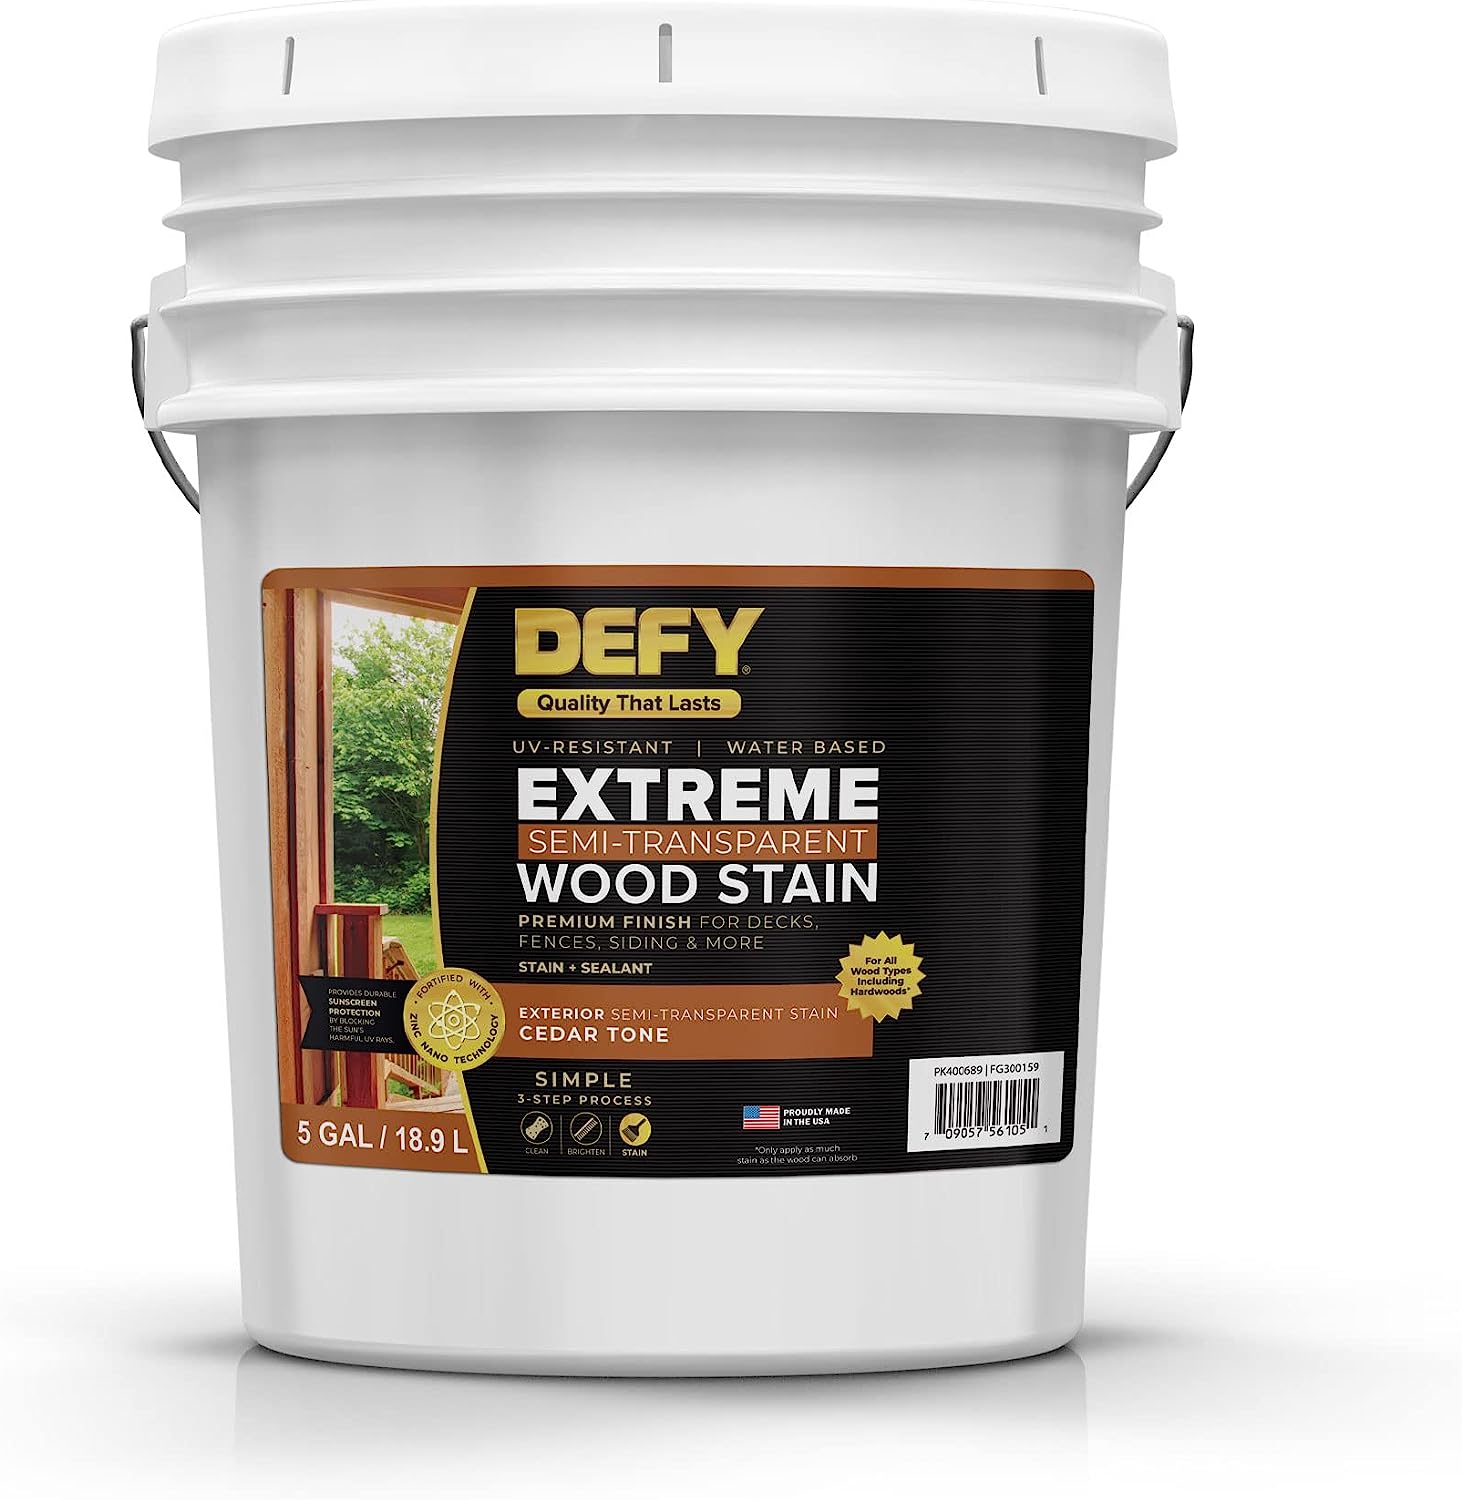 DEFY Extreme Semi-Transparent Wood Stain (Cedar Tone)